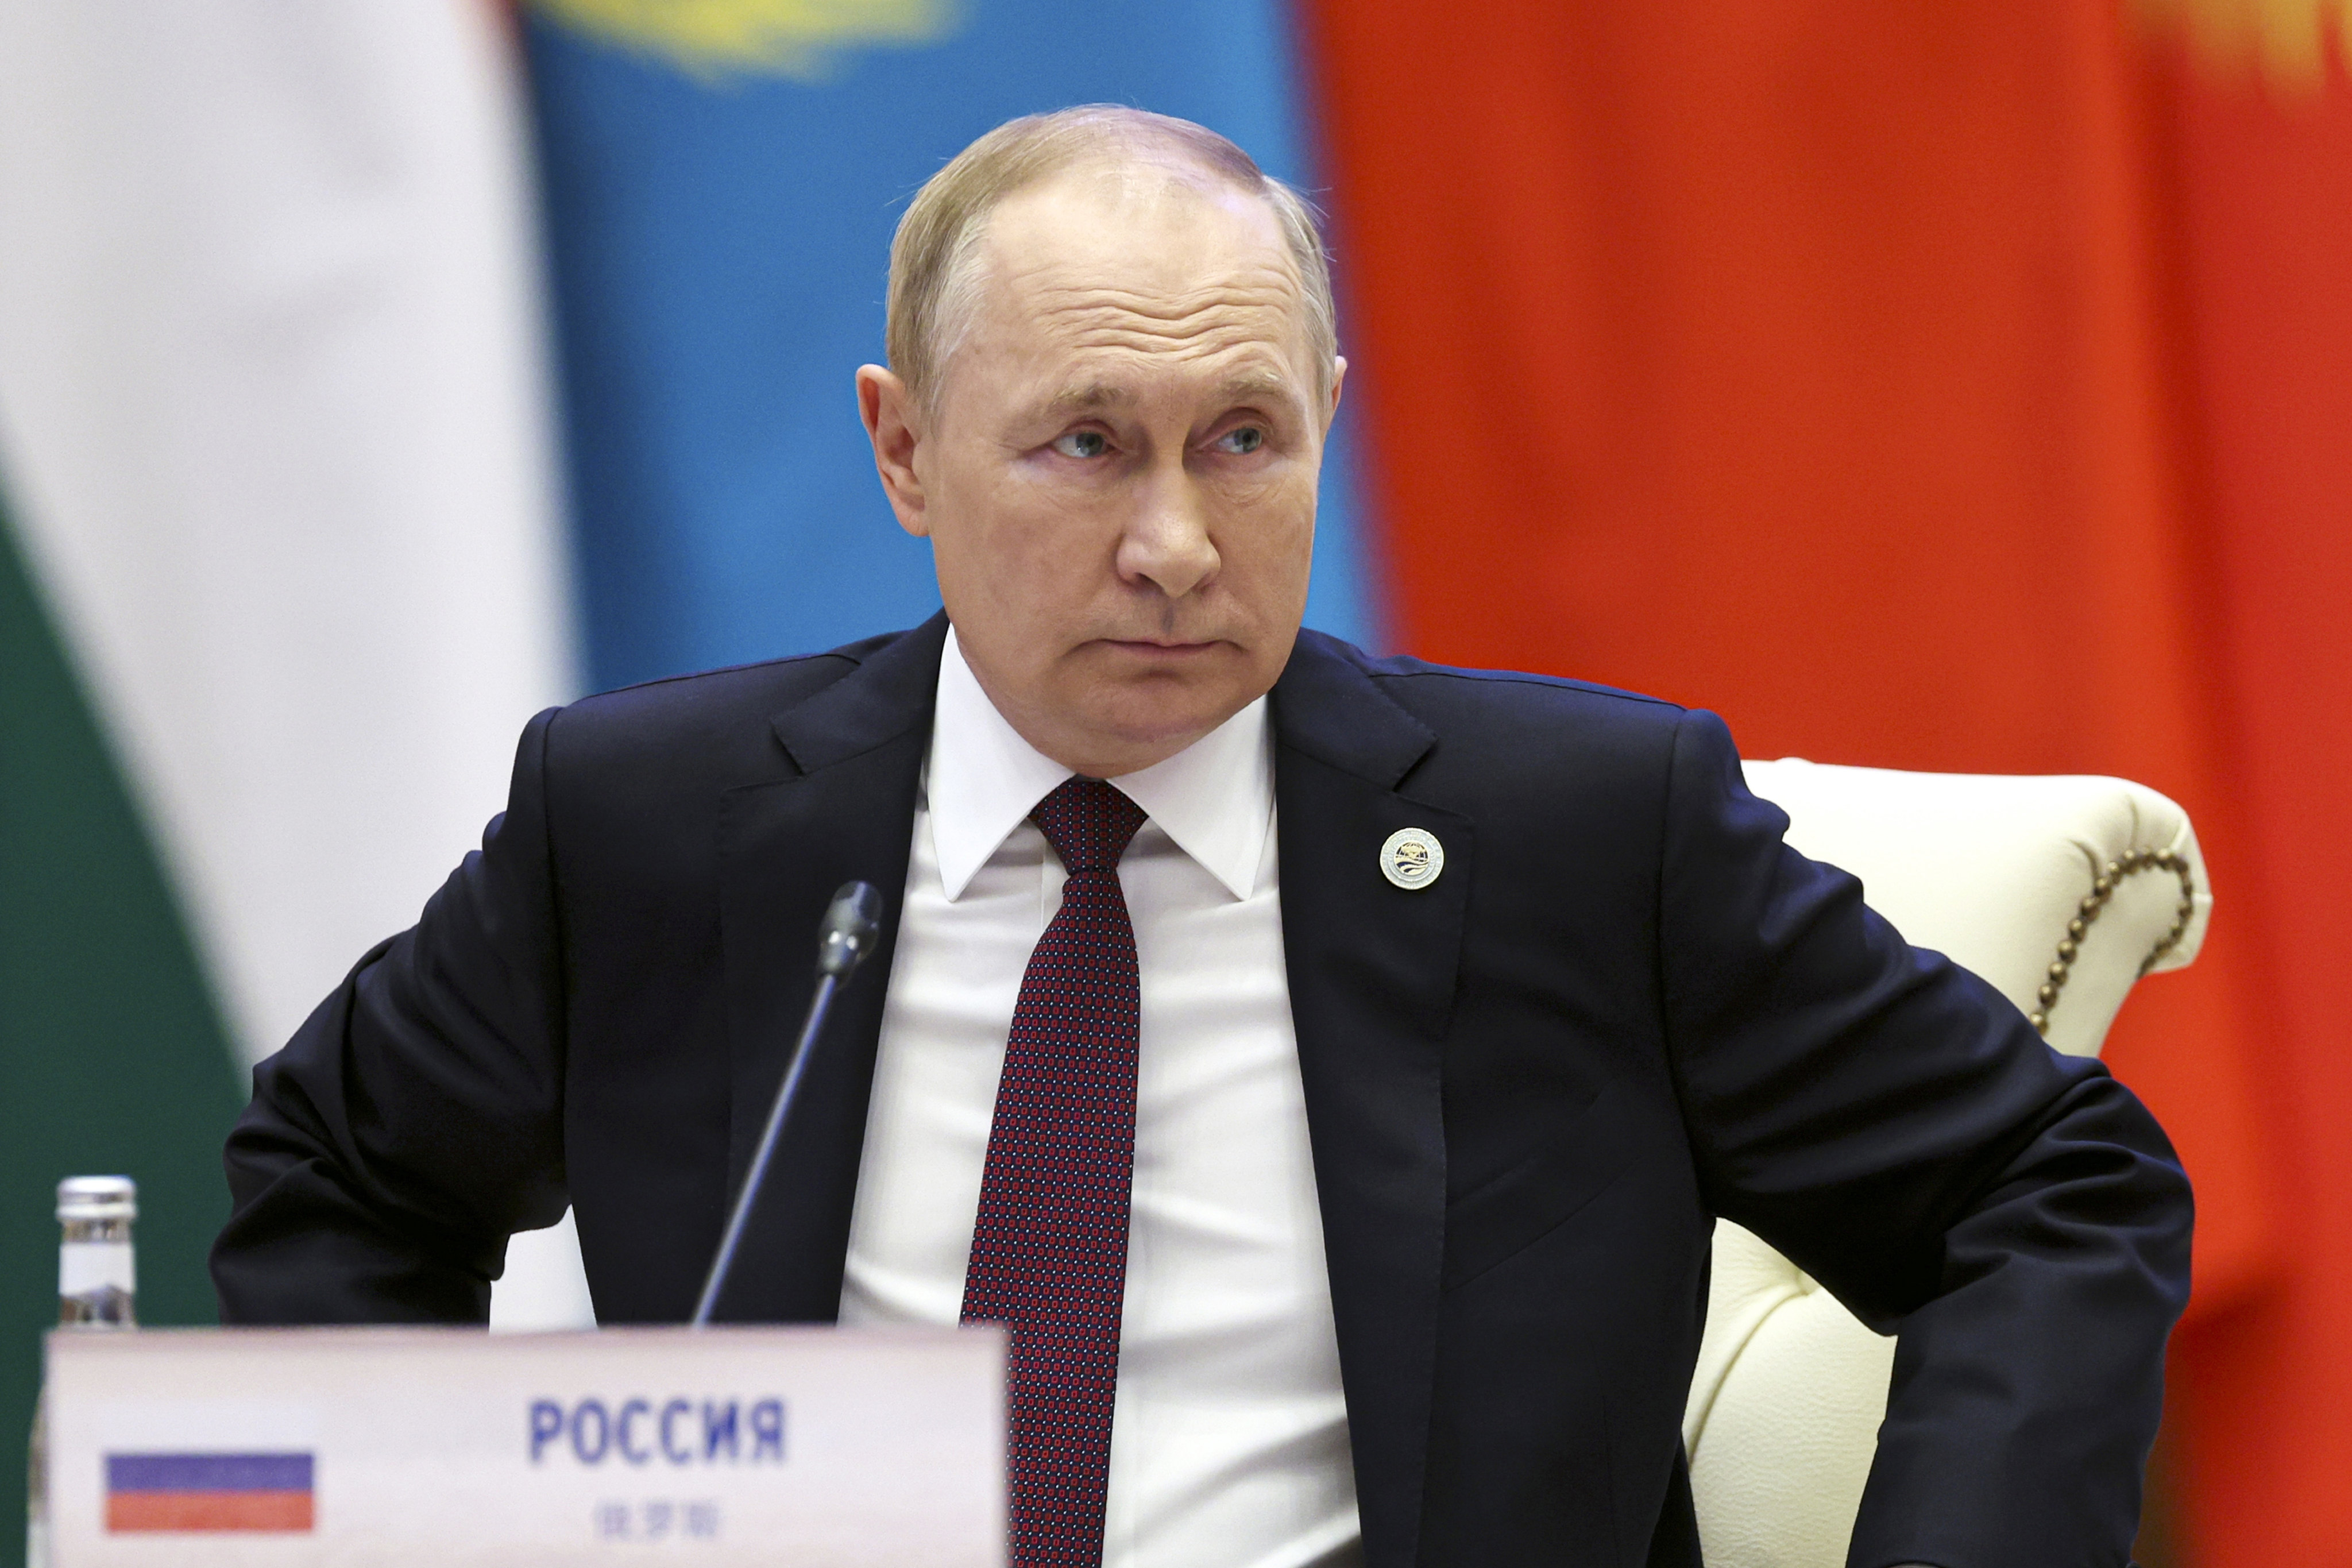 The International Criminal Court has issued an arrest warrant for Russian President Vladimir Putin for war crimes. Photo: AP